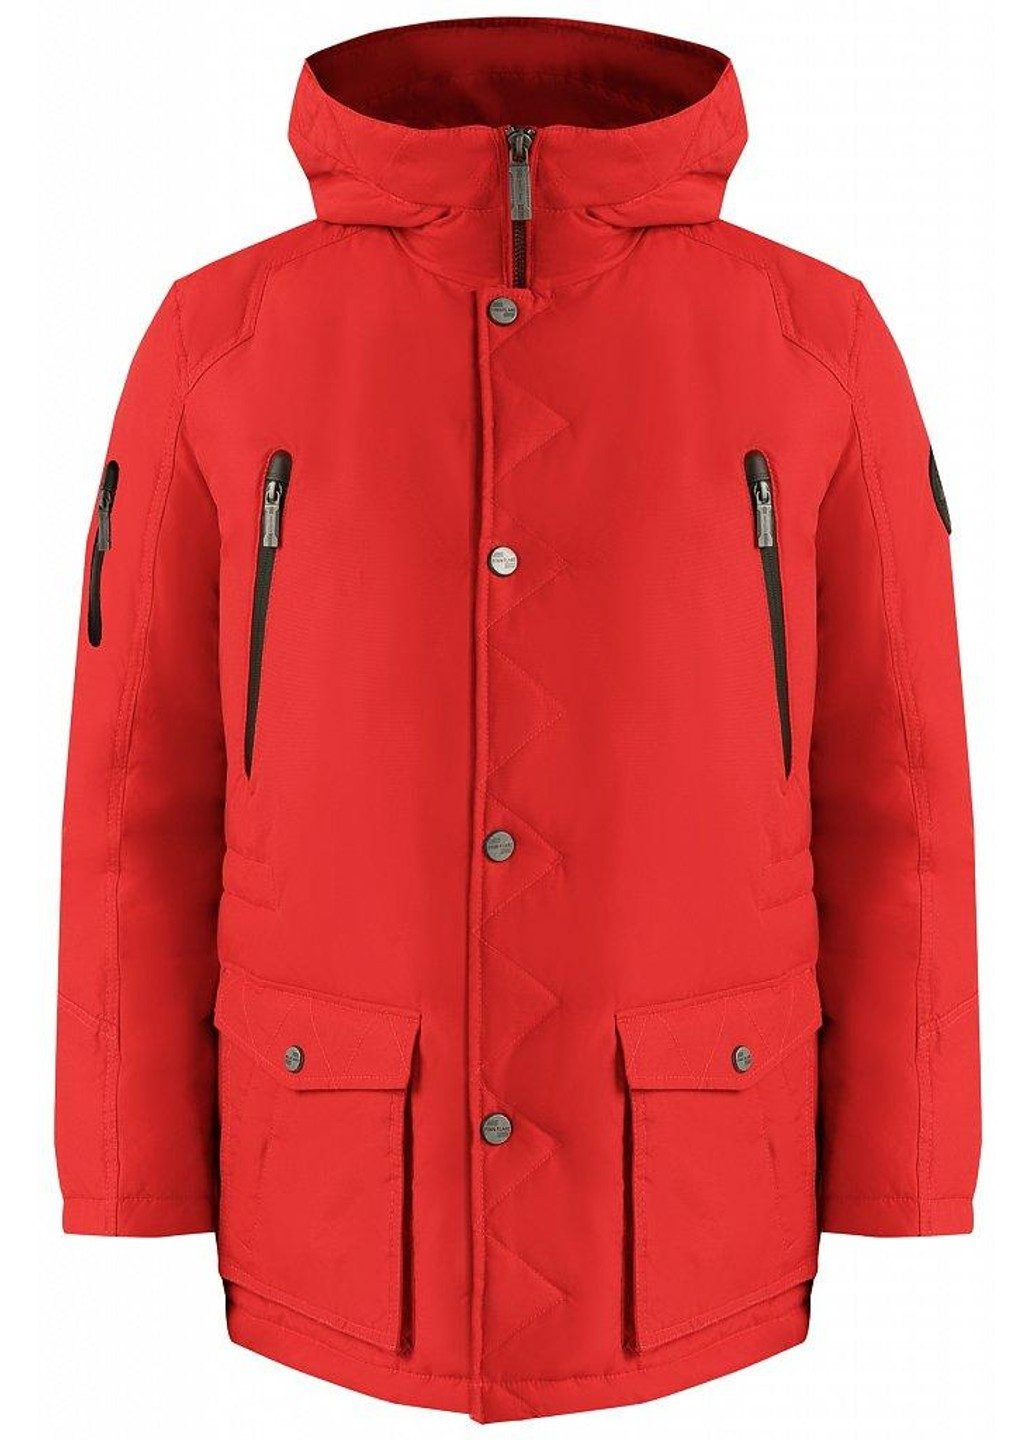 Красная зимняя зимняя куртка a19-22014f-300 Finn Flare